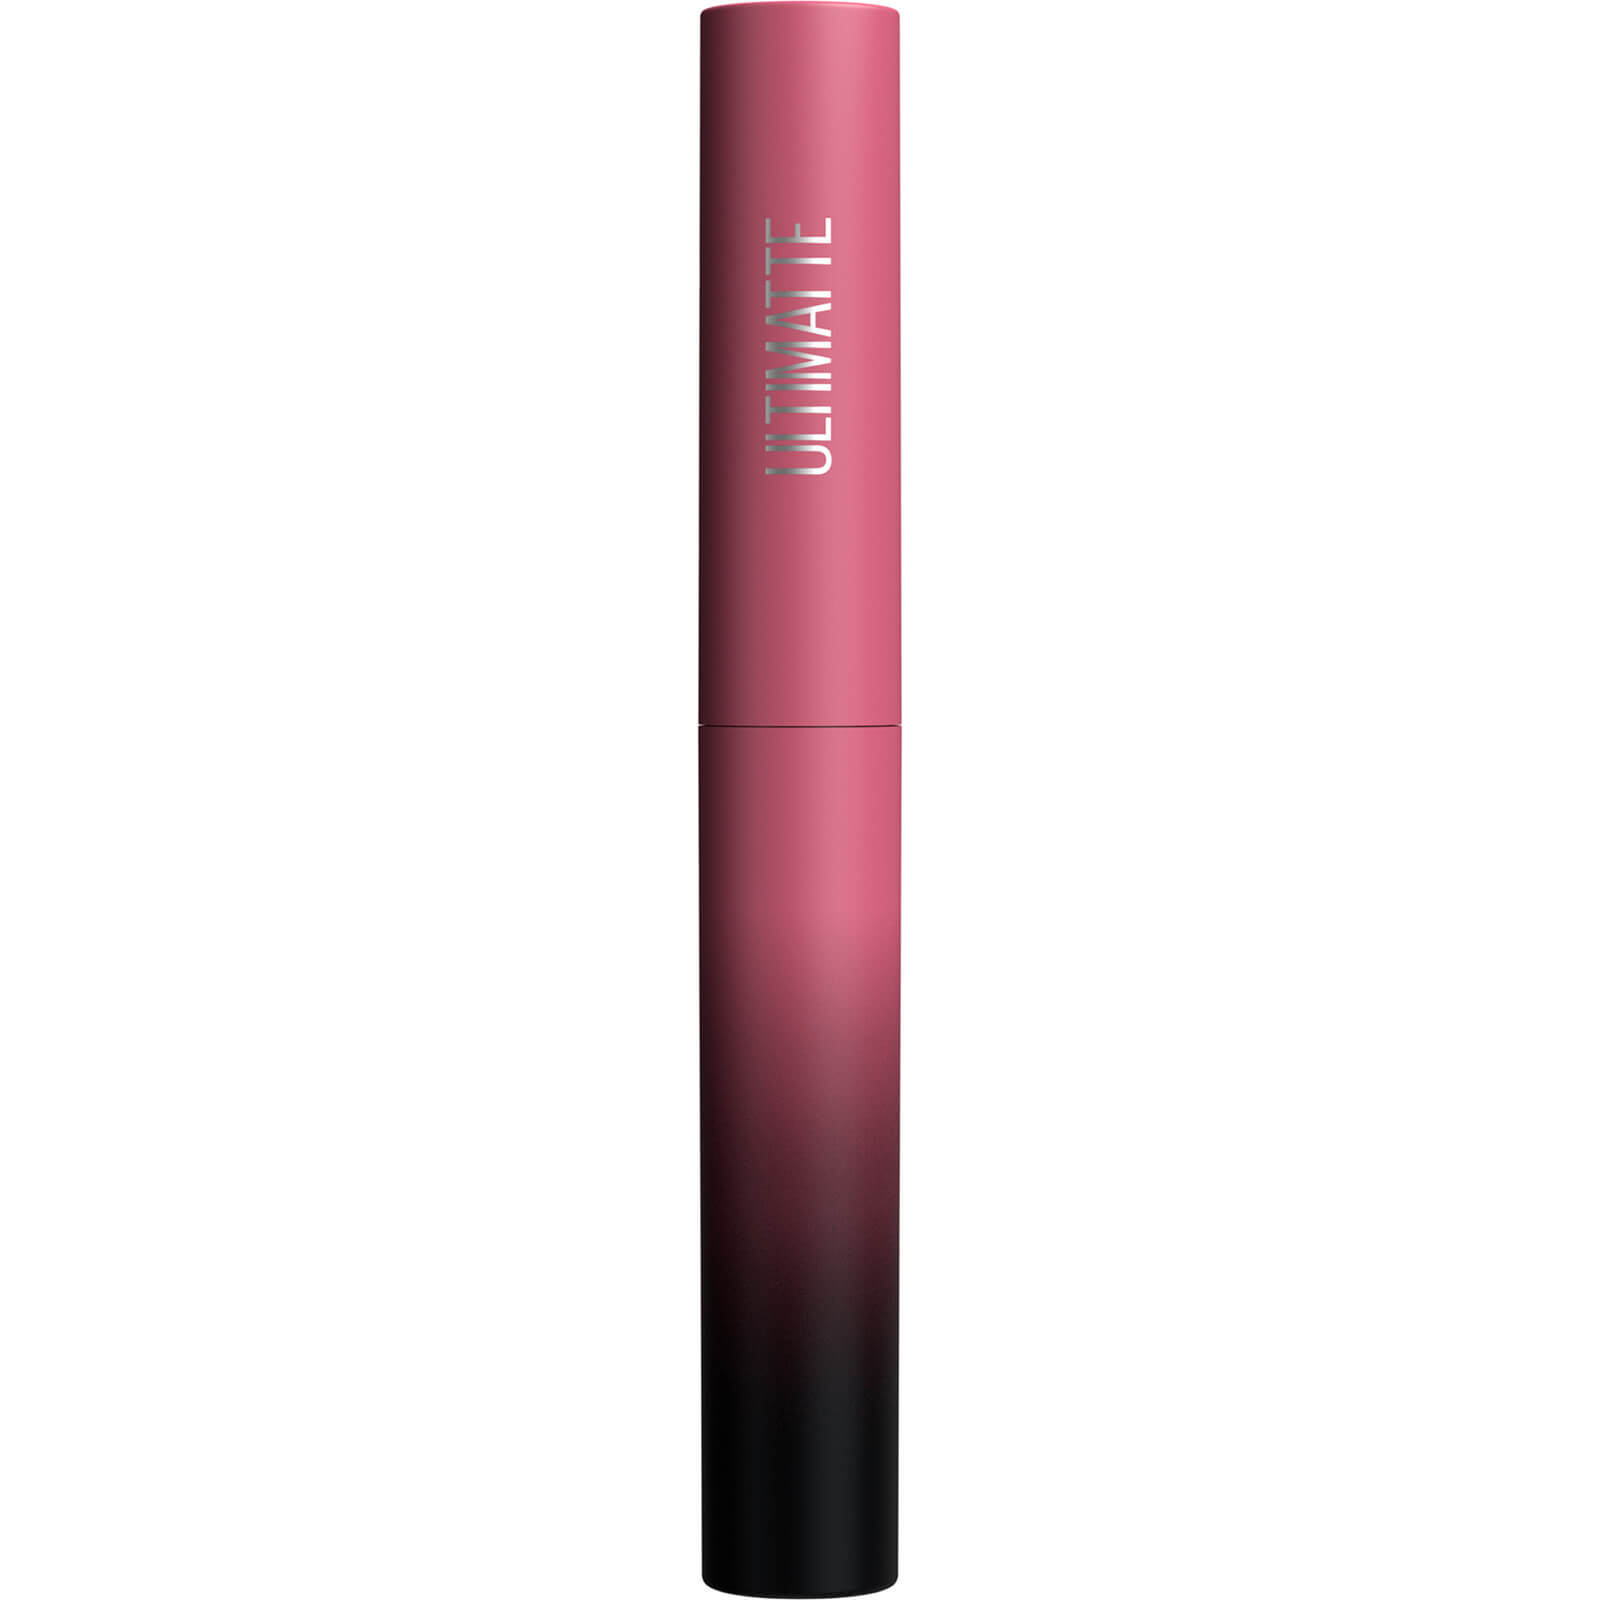 Maybelline Colour Sensational Ultimatte Slim Lipstick 25g (Various Shades) - More Mauve